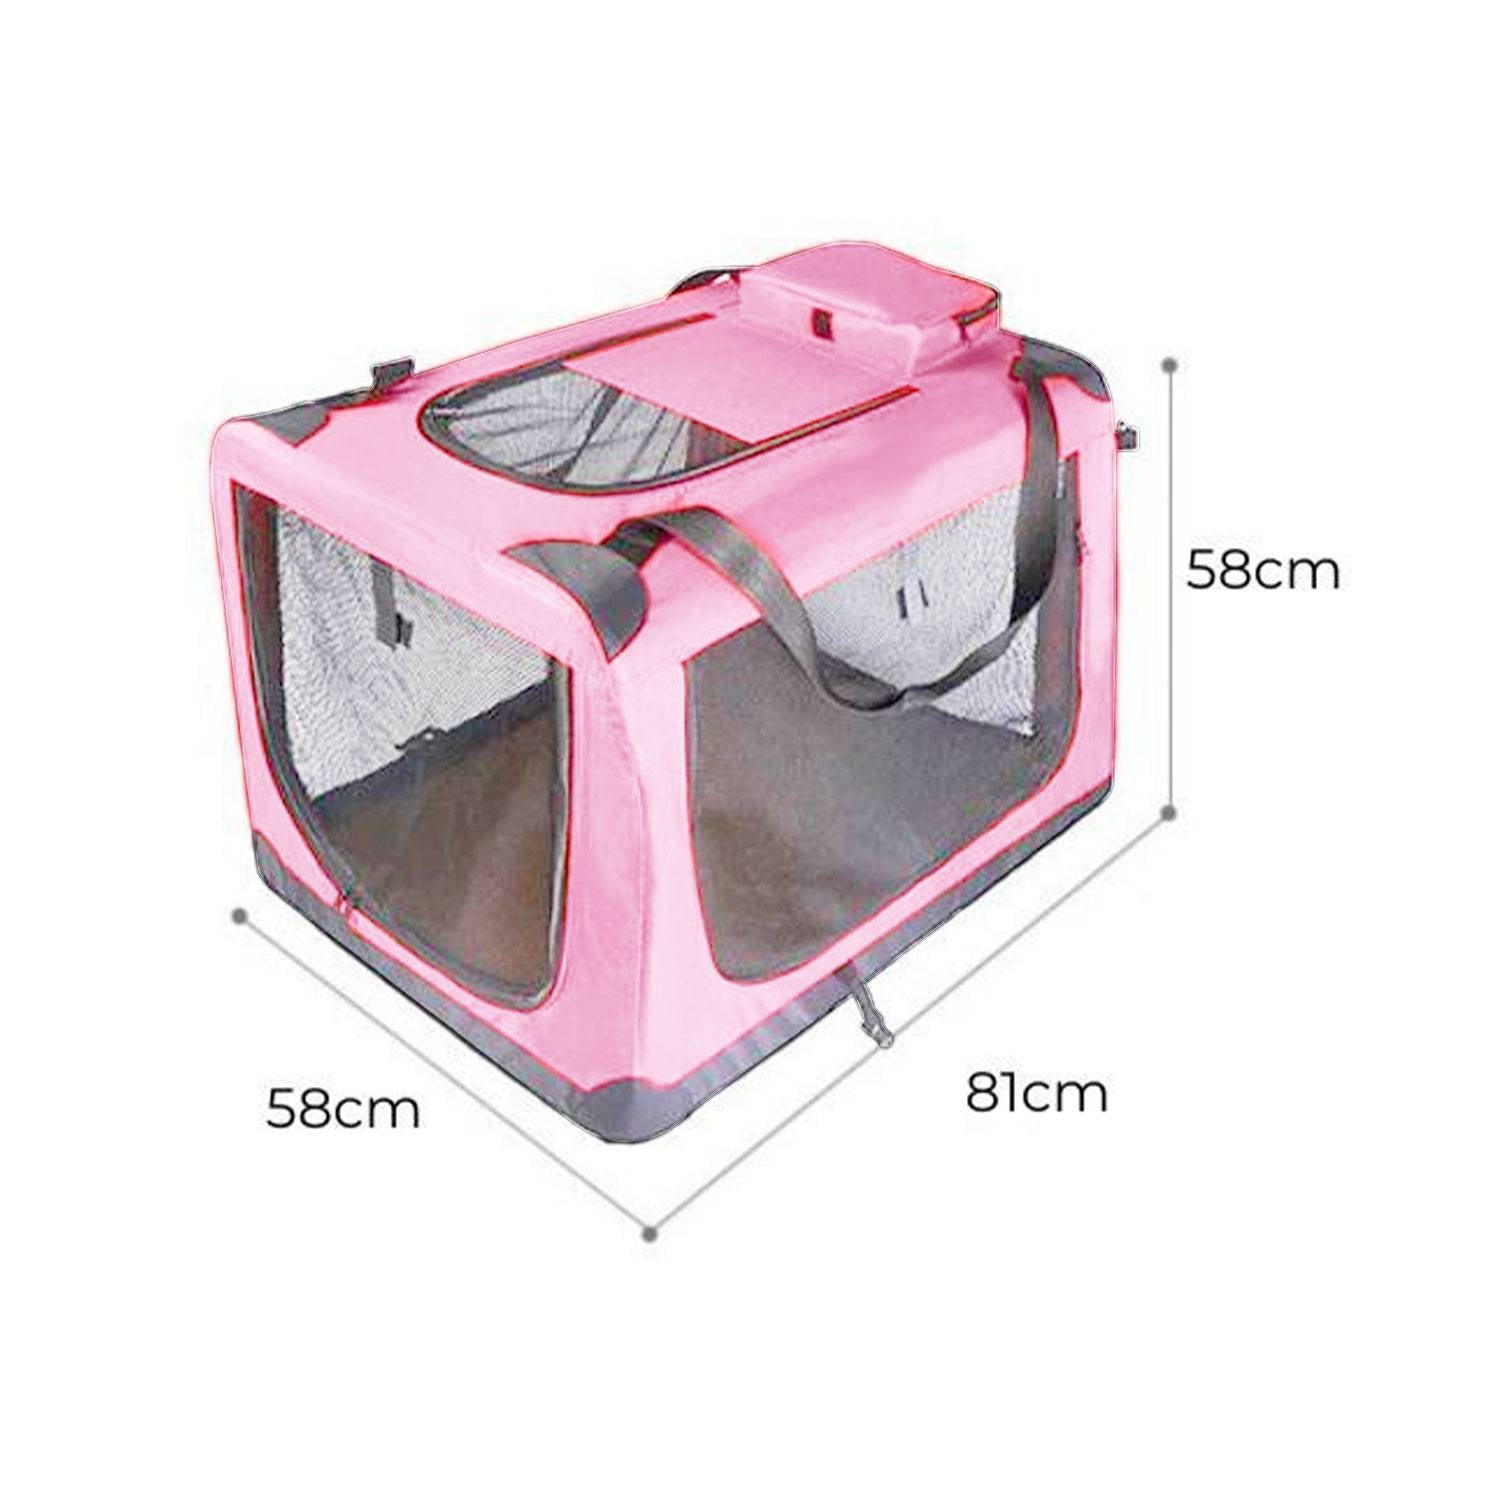 FLOOFI Portable Pet Carrier-Model 1-XL Size (Pink)